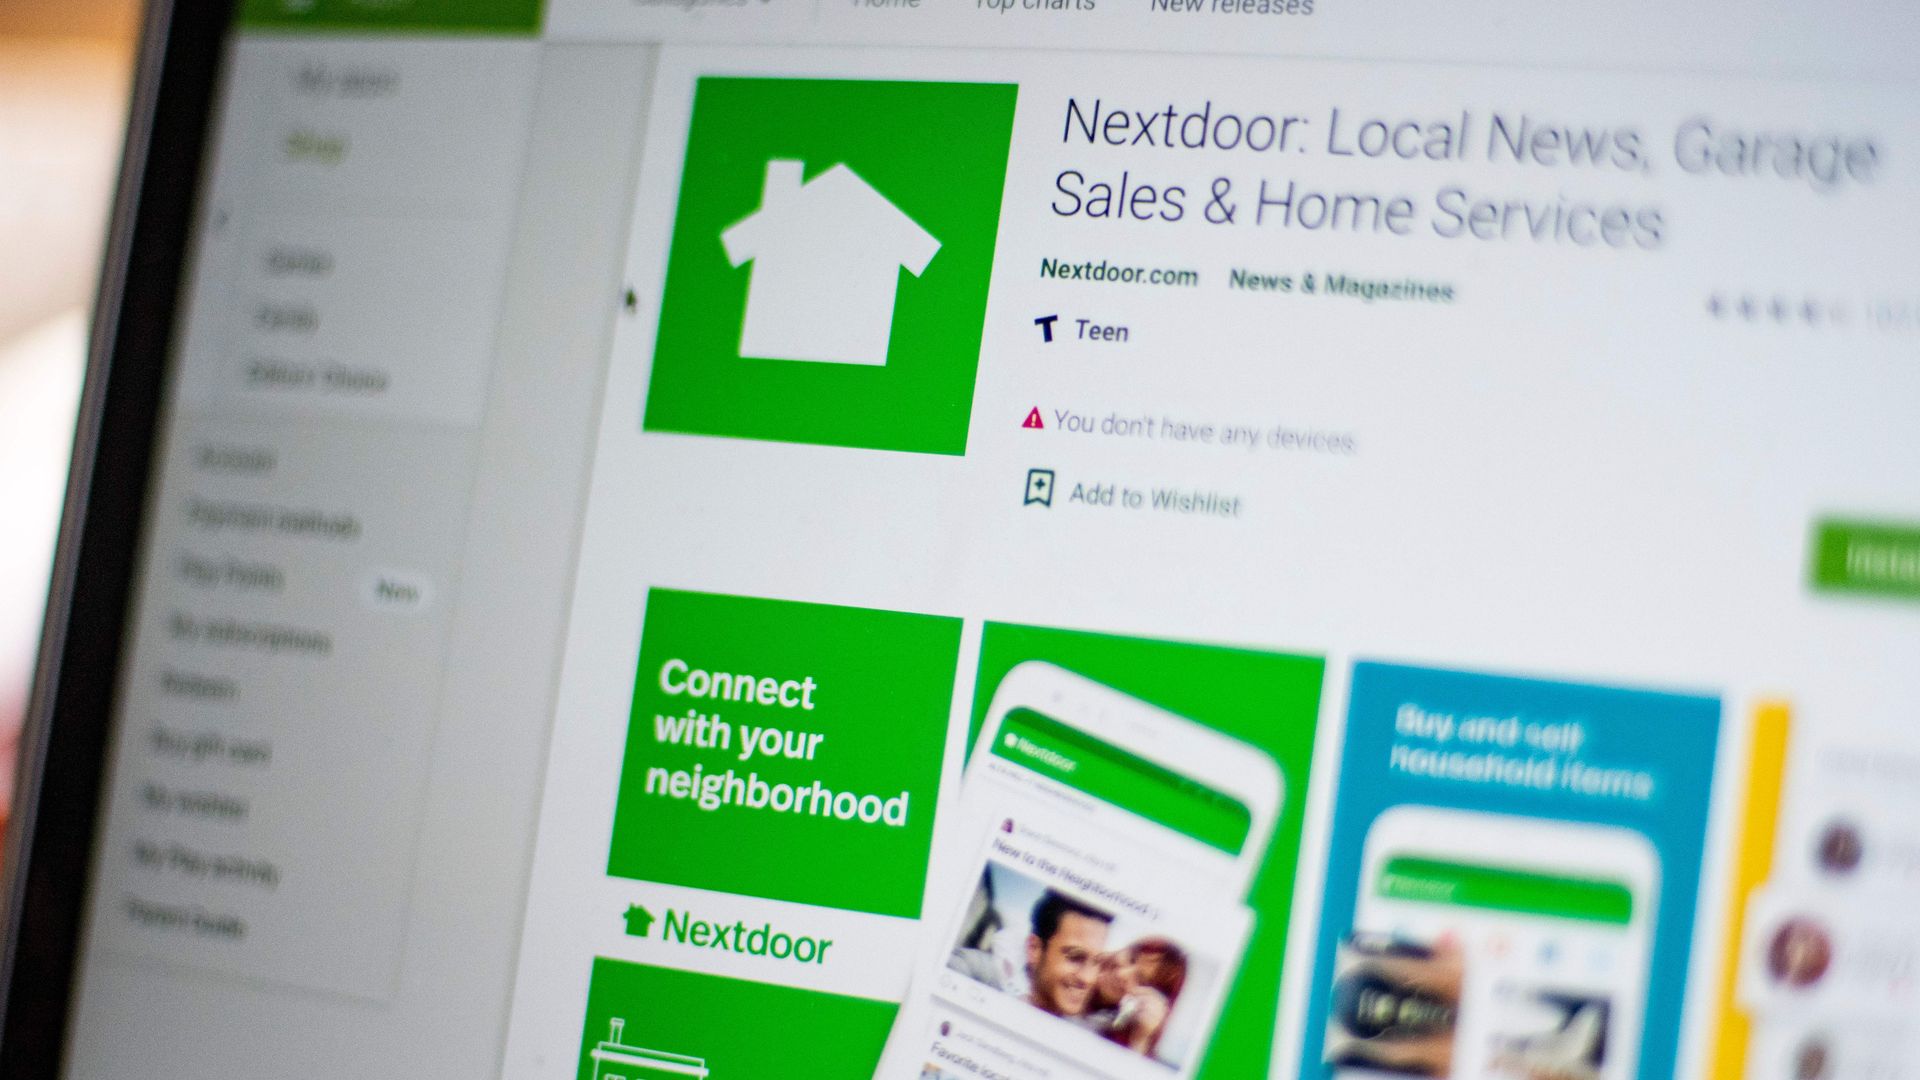 Nextdoor, the hyper local social network, is seen on a computer screen